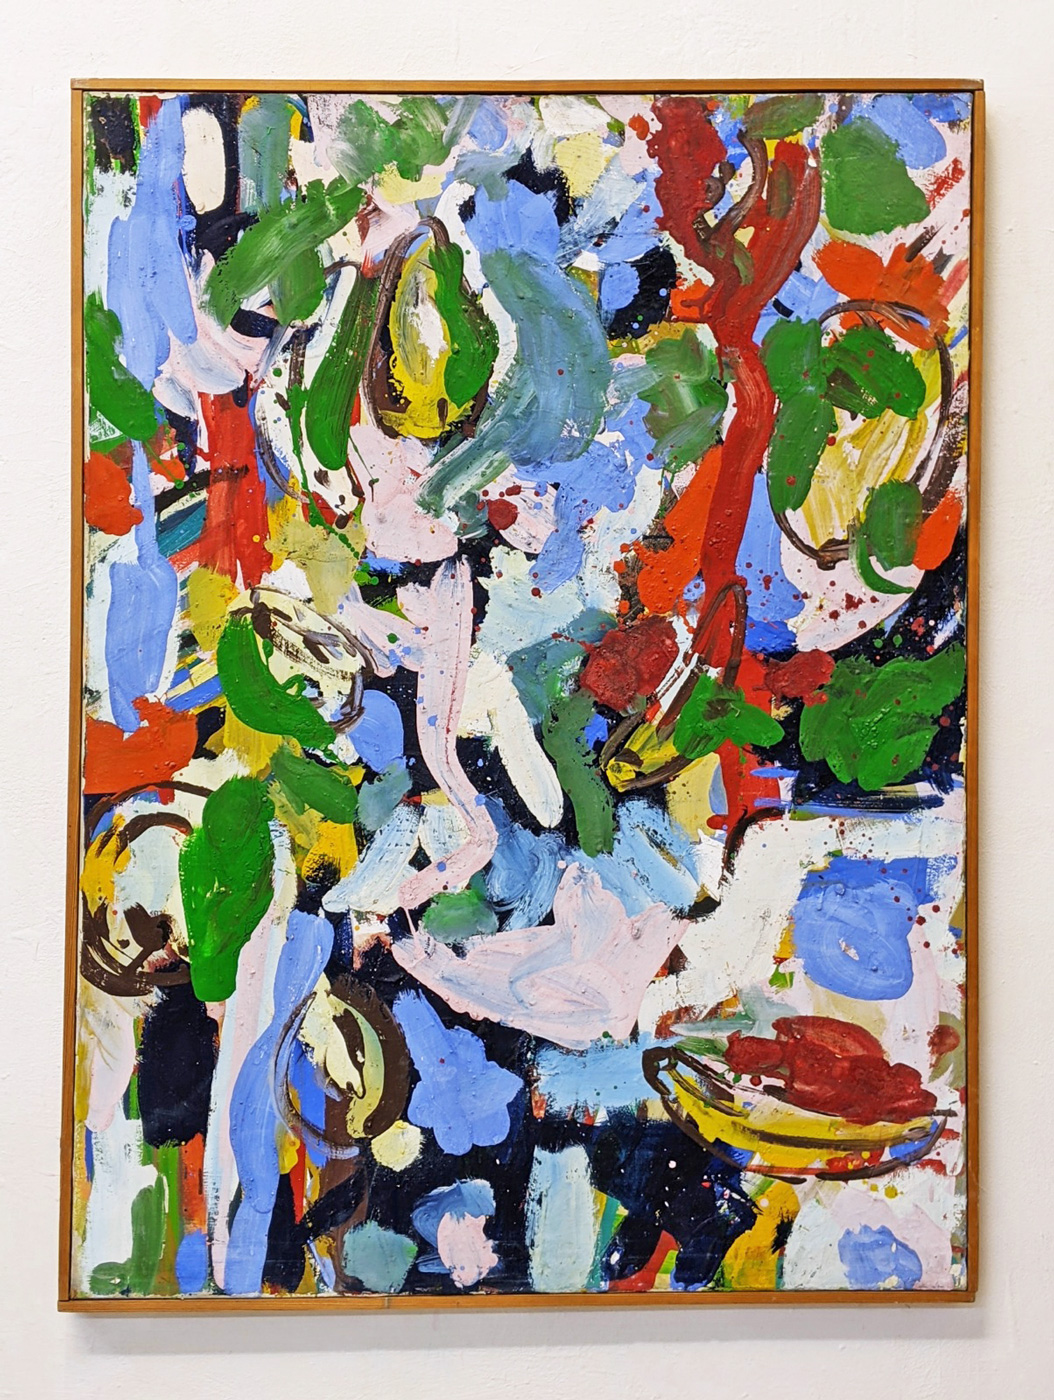 "Herbst", 100 x 74 cm, Acrylbinder, Pigmente, 1984